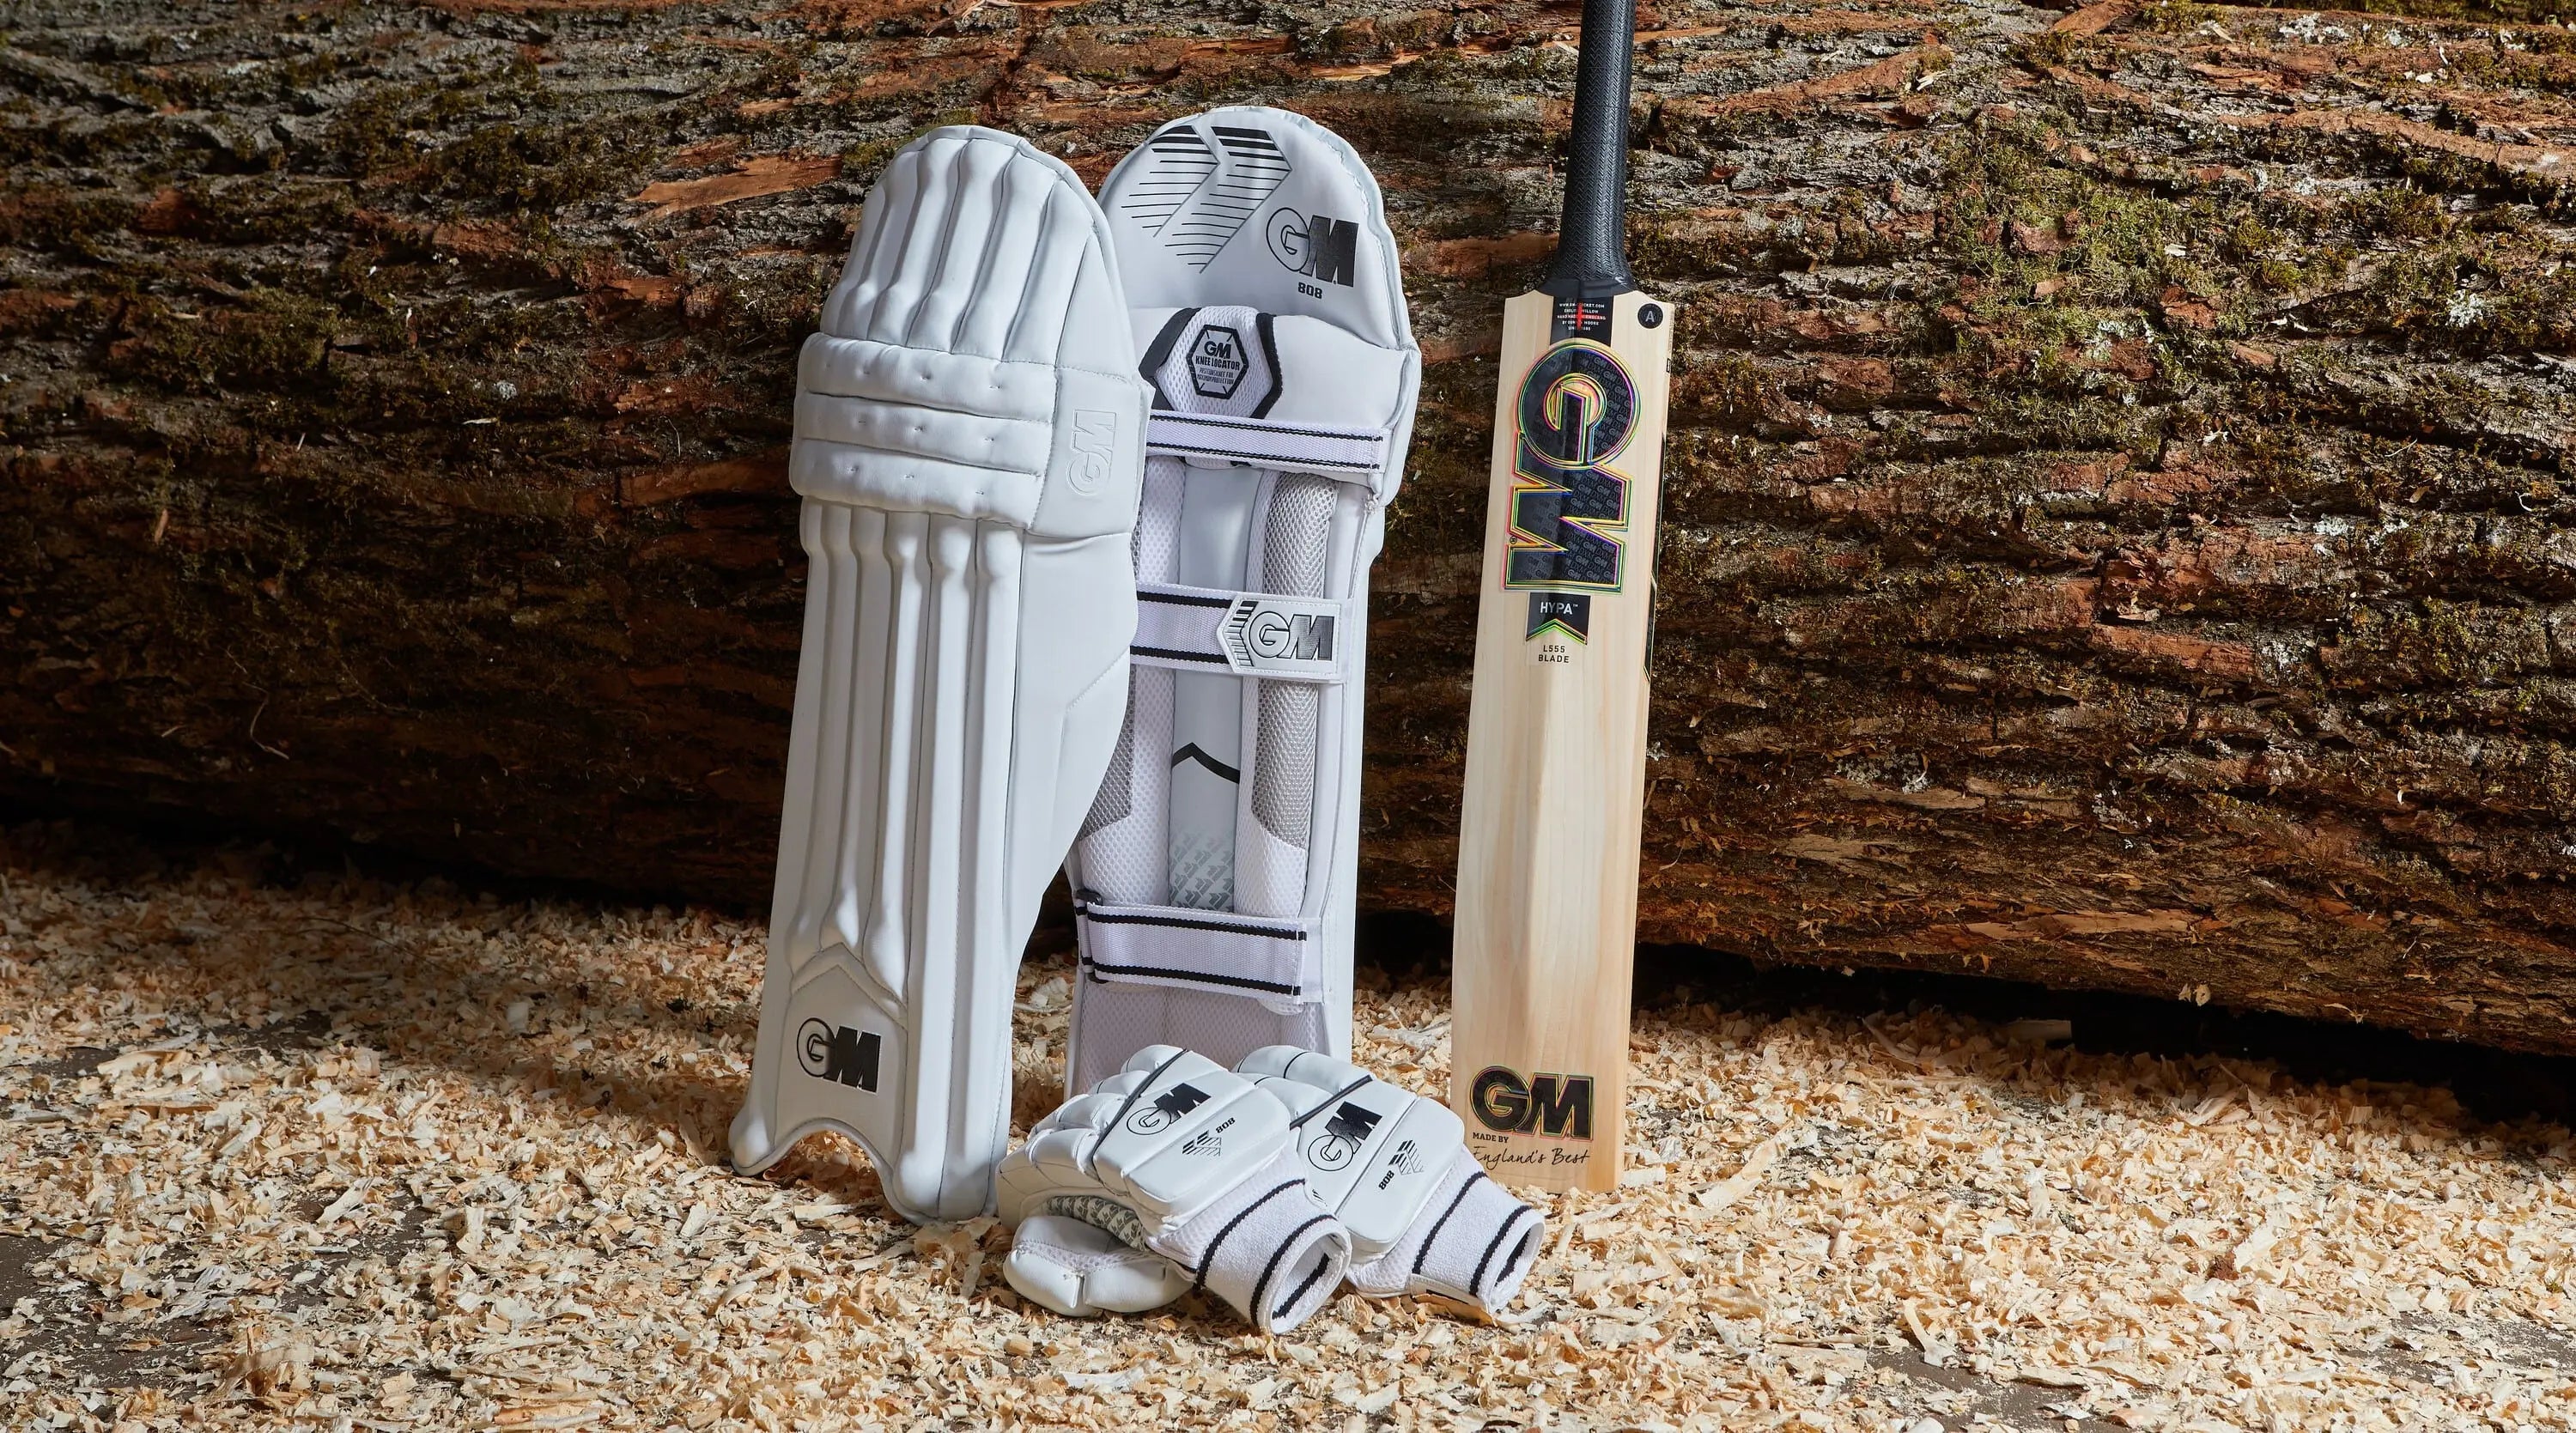 GM (Gunn & Moore) Cricket Batting Gloves